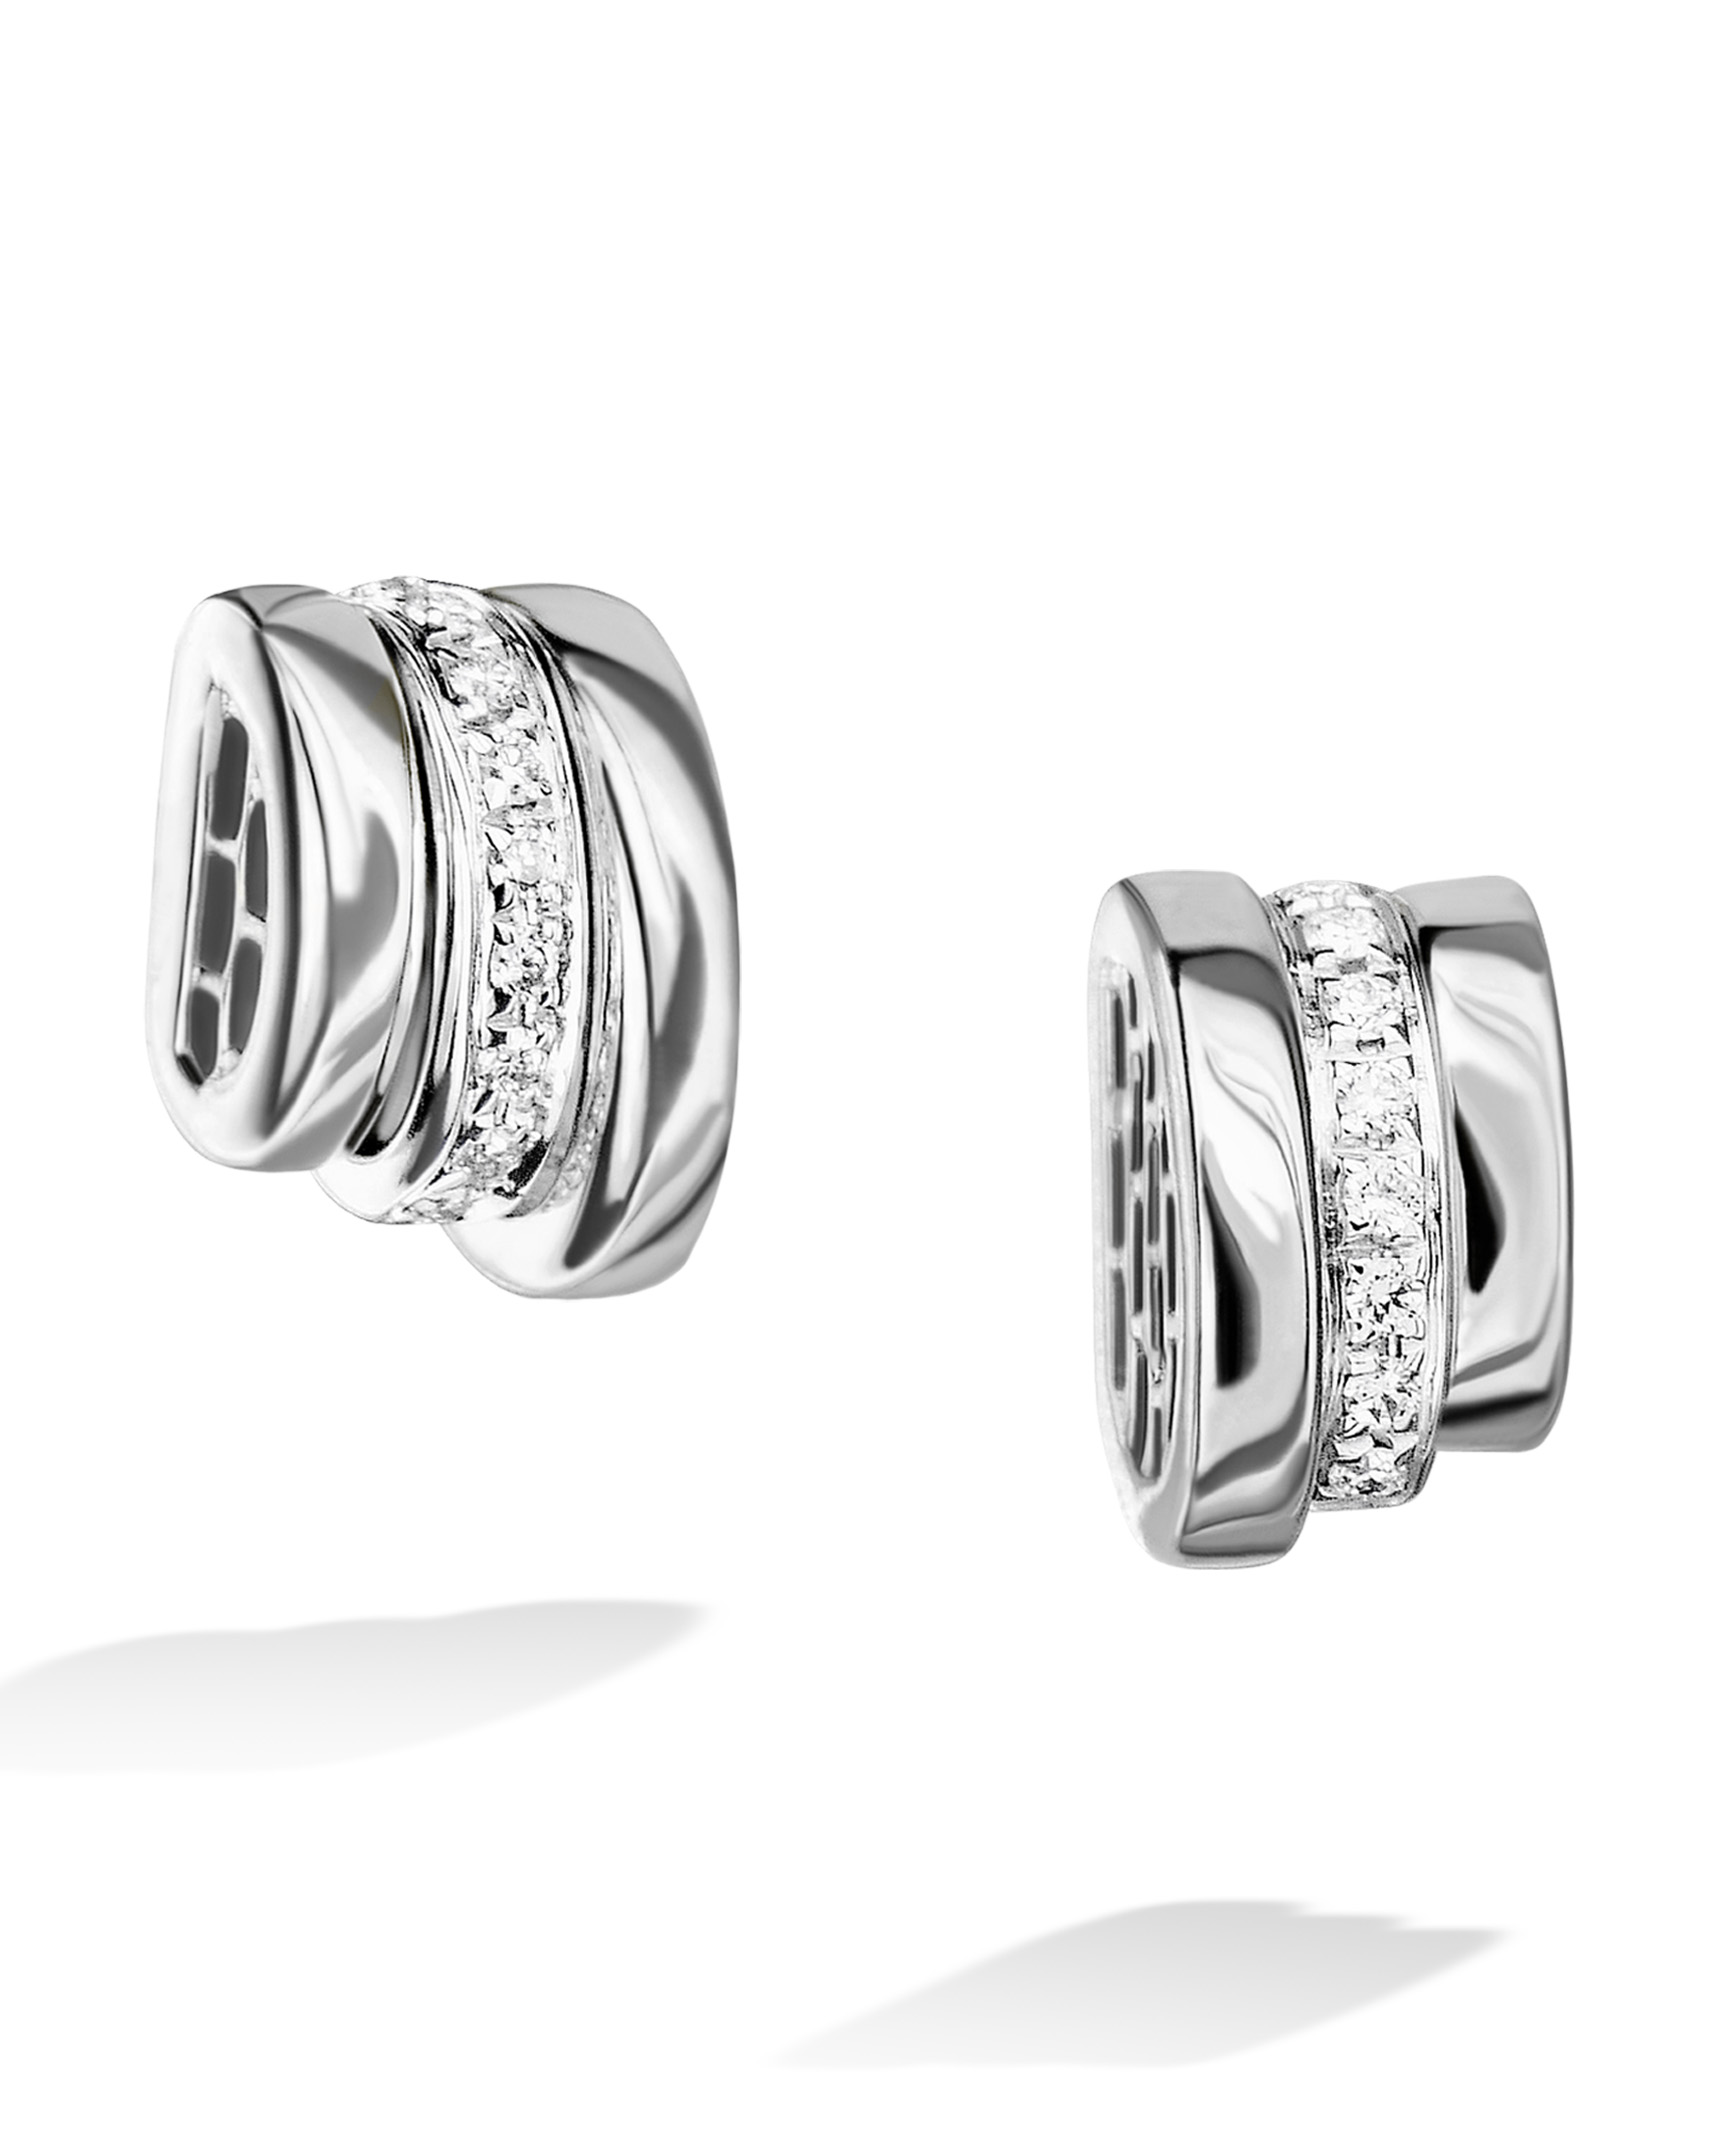 Aggregate more than 209 neymar diamond earrings